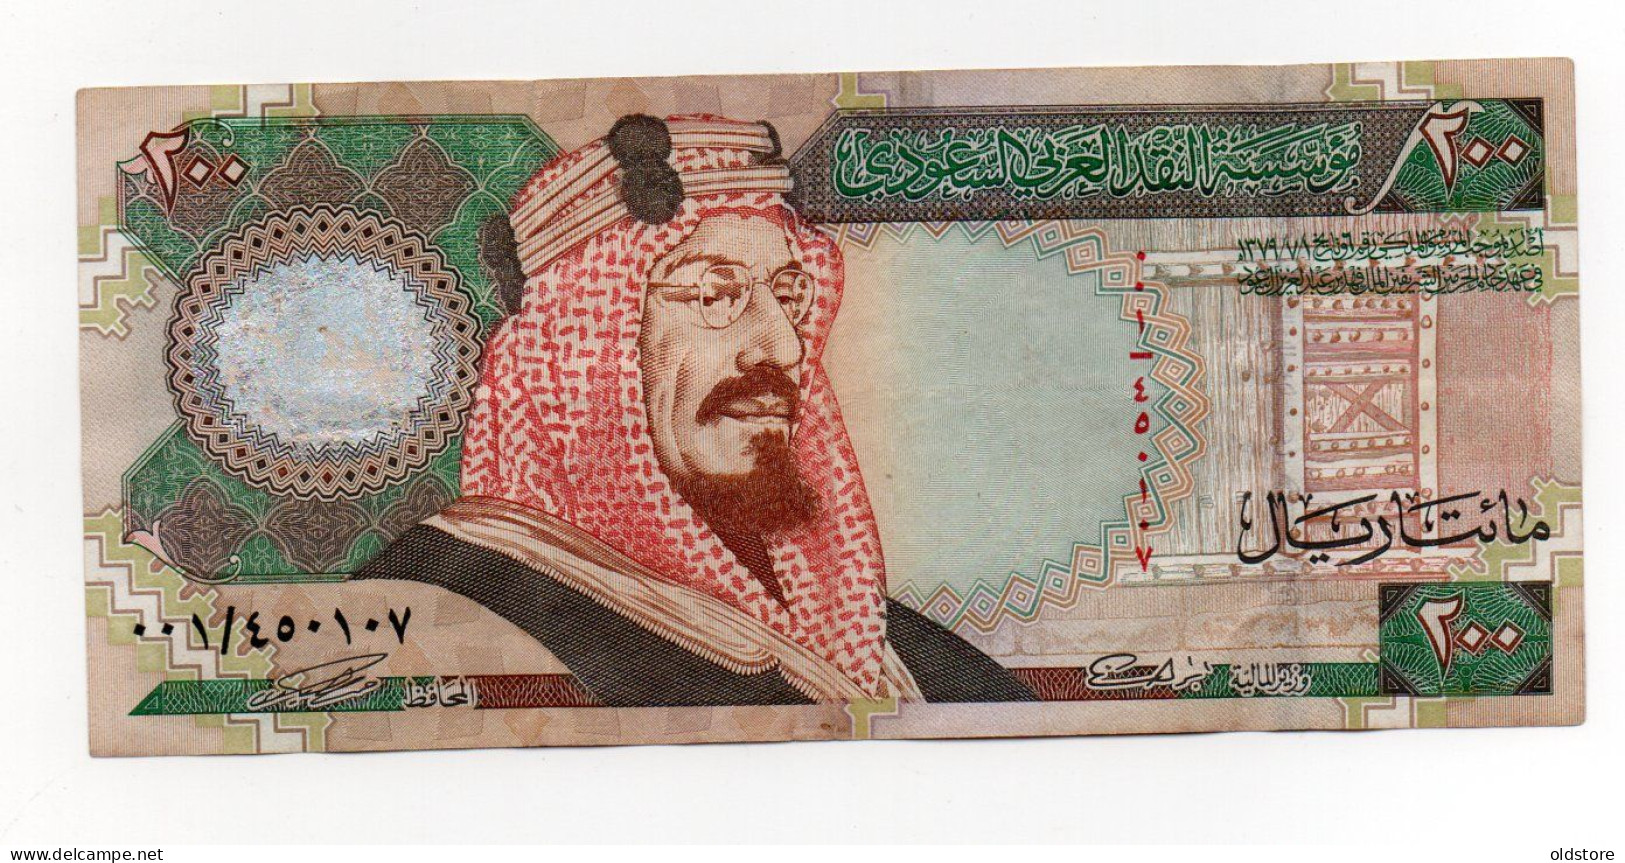 Saudi Arabia Banknotes 200 Riyals - ND 2000 -  First Prefix 001 Rare - Used Condition - Saudi Arabia